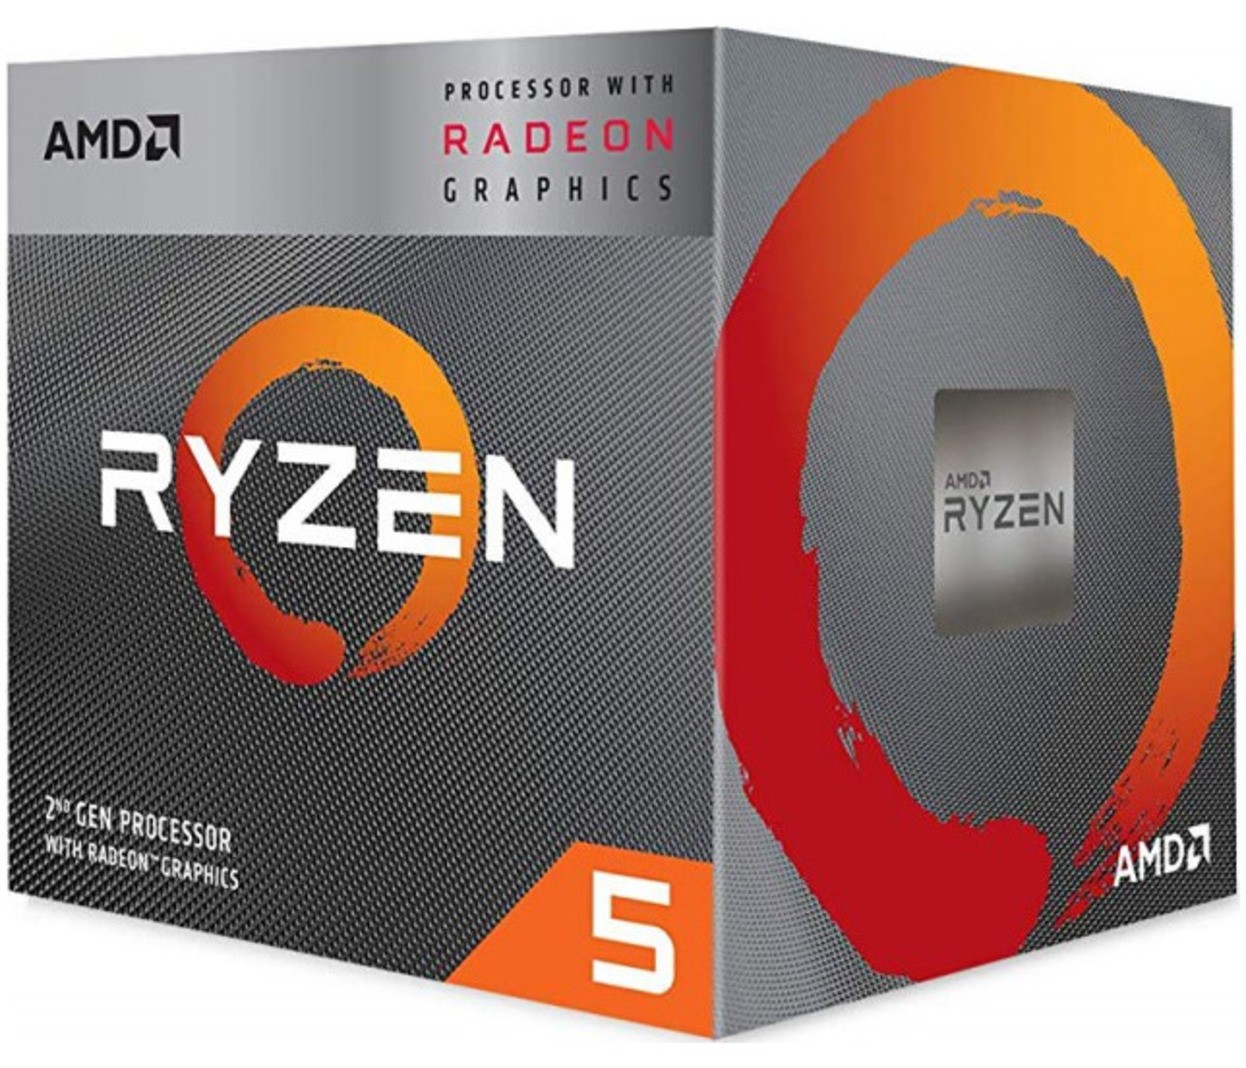 AMD Ryzen 5 3400G z RX Vega 11 grafiko